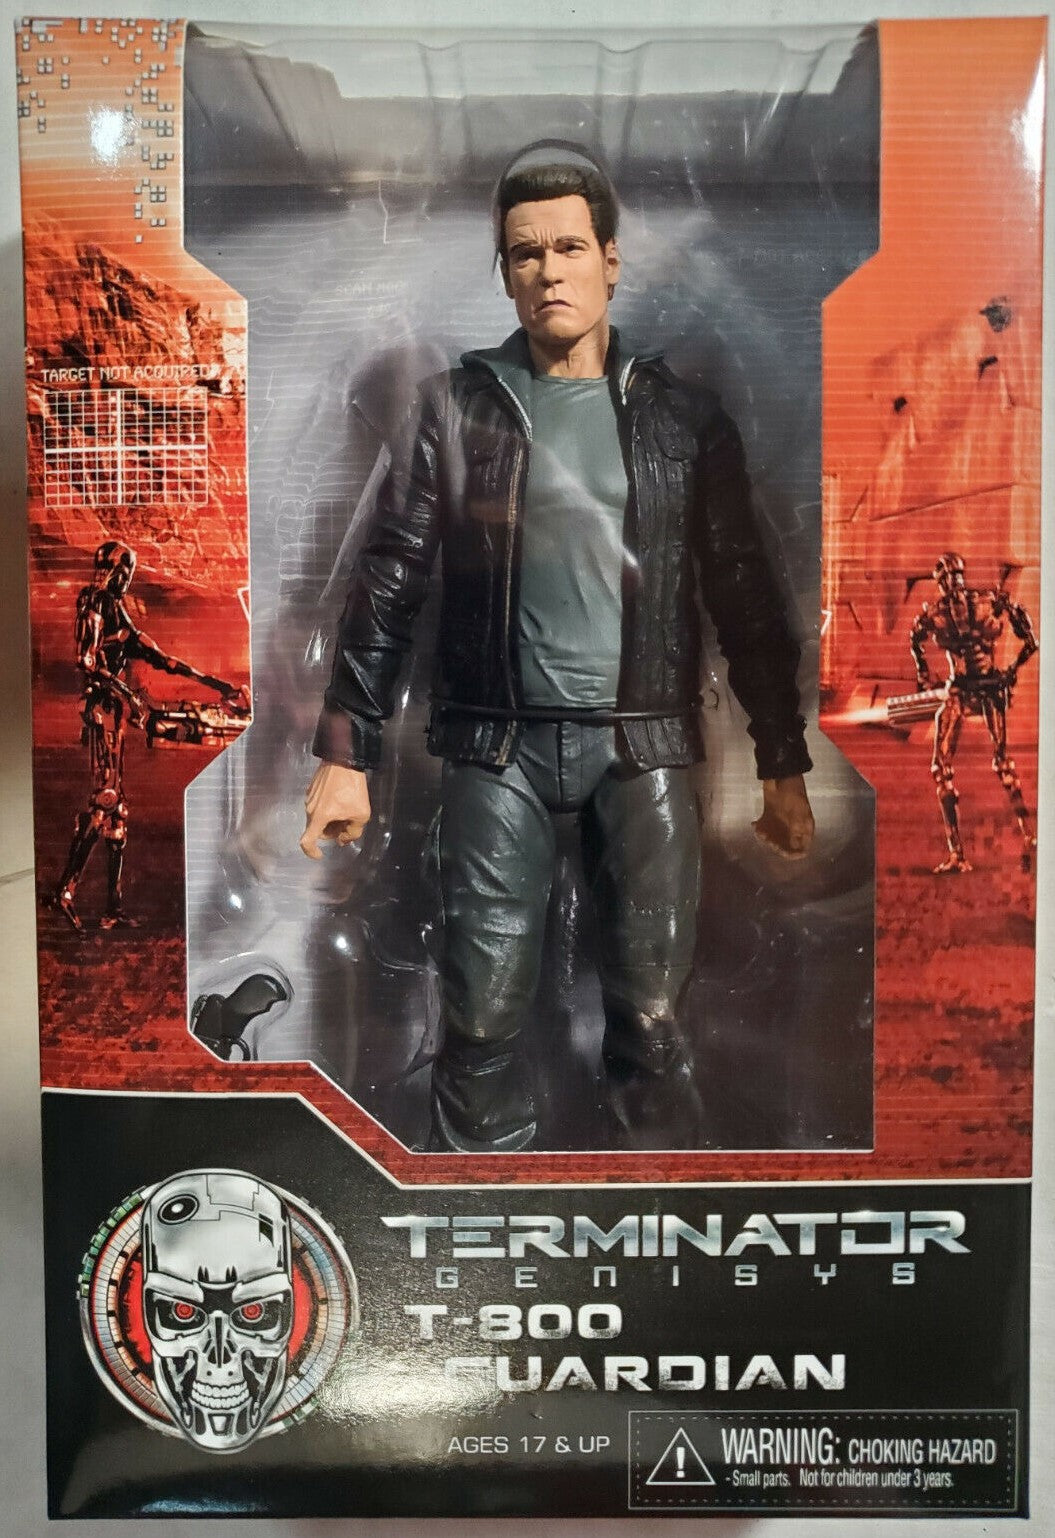 Terminator Genisys series 1 T-800 Guardian action figure